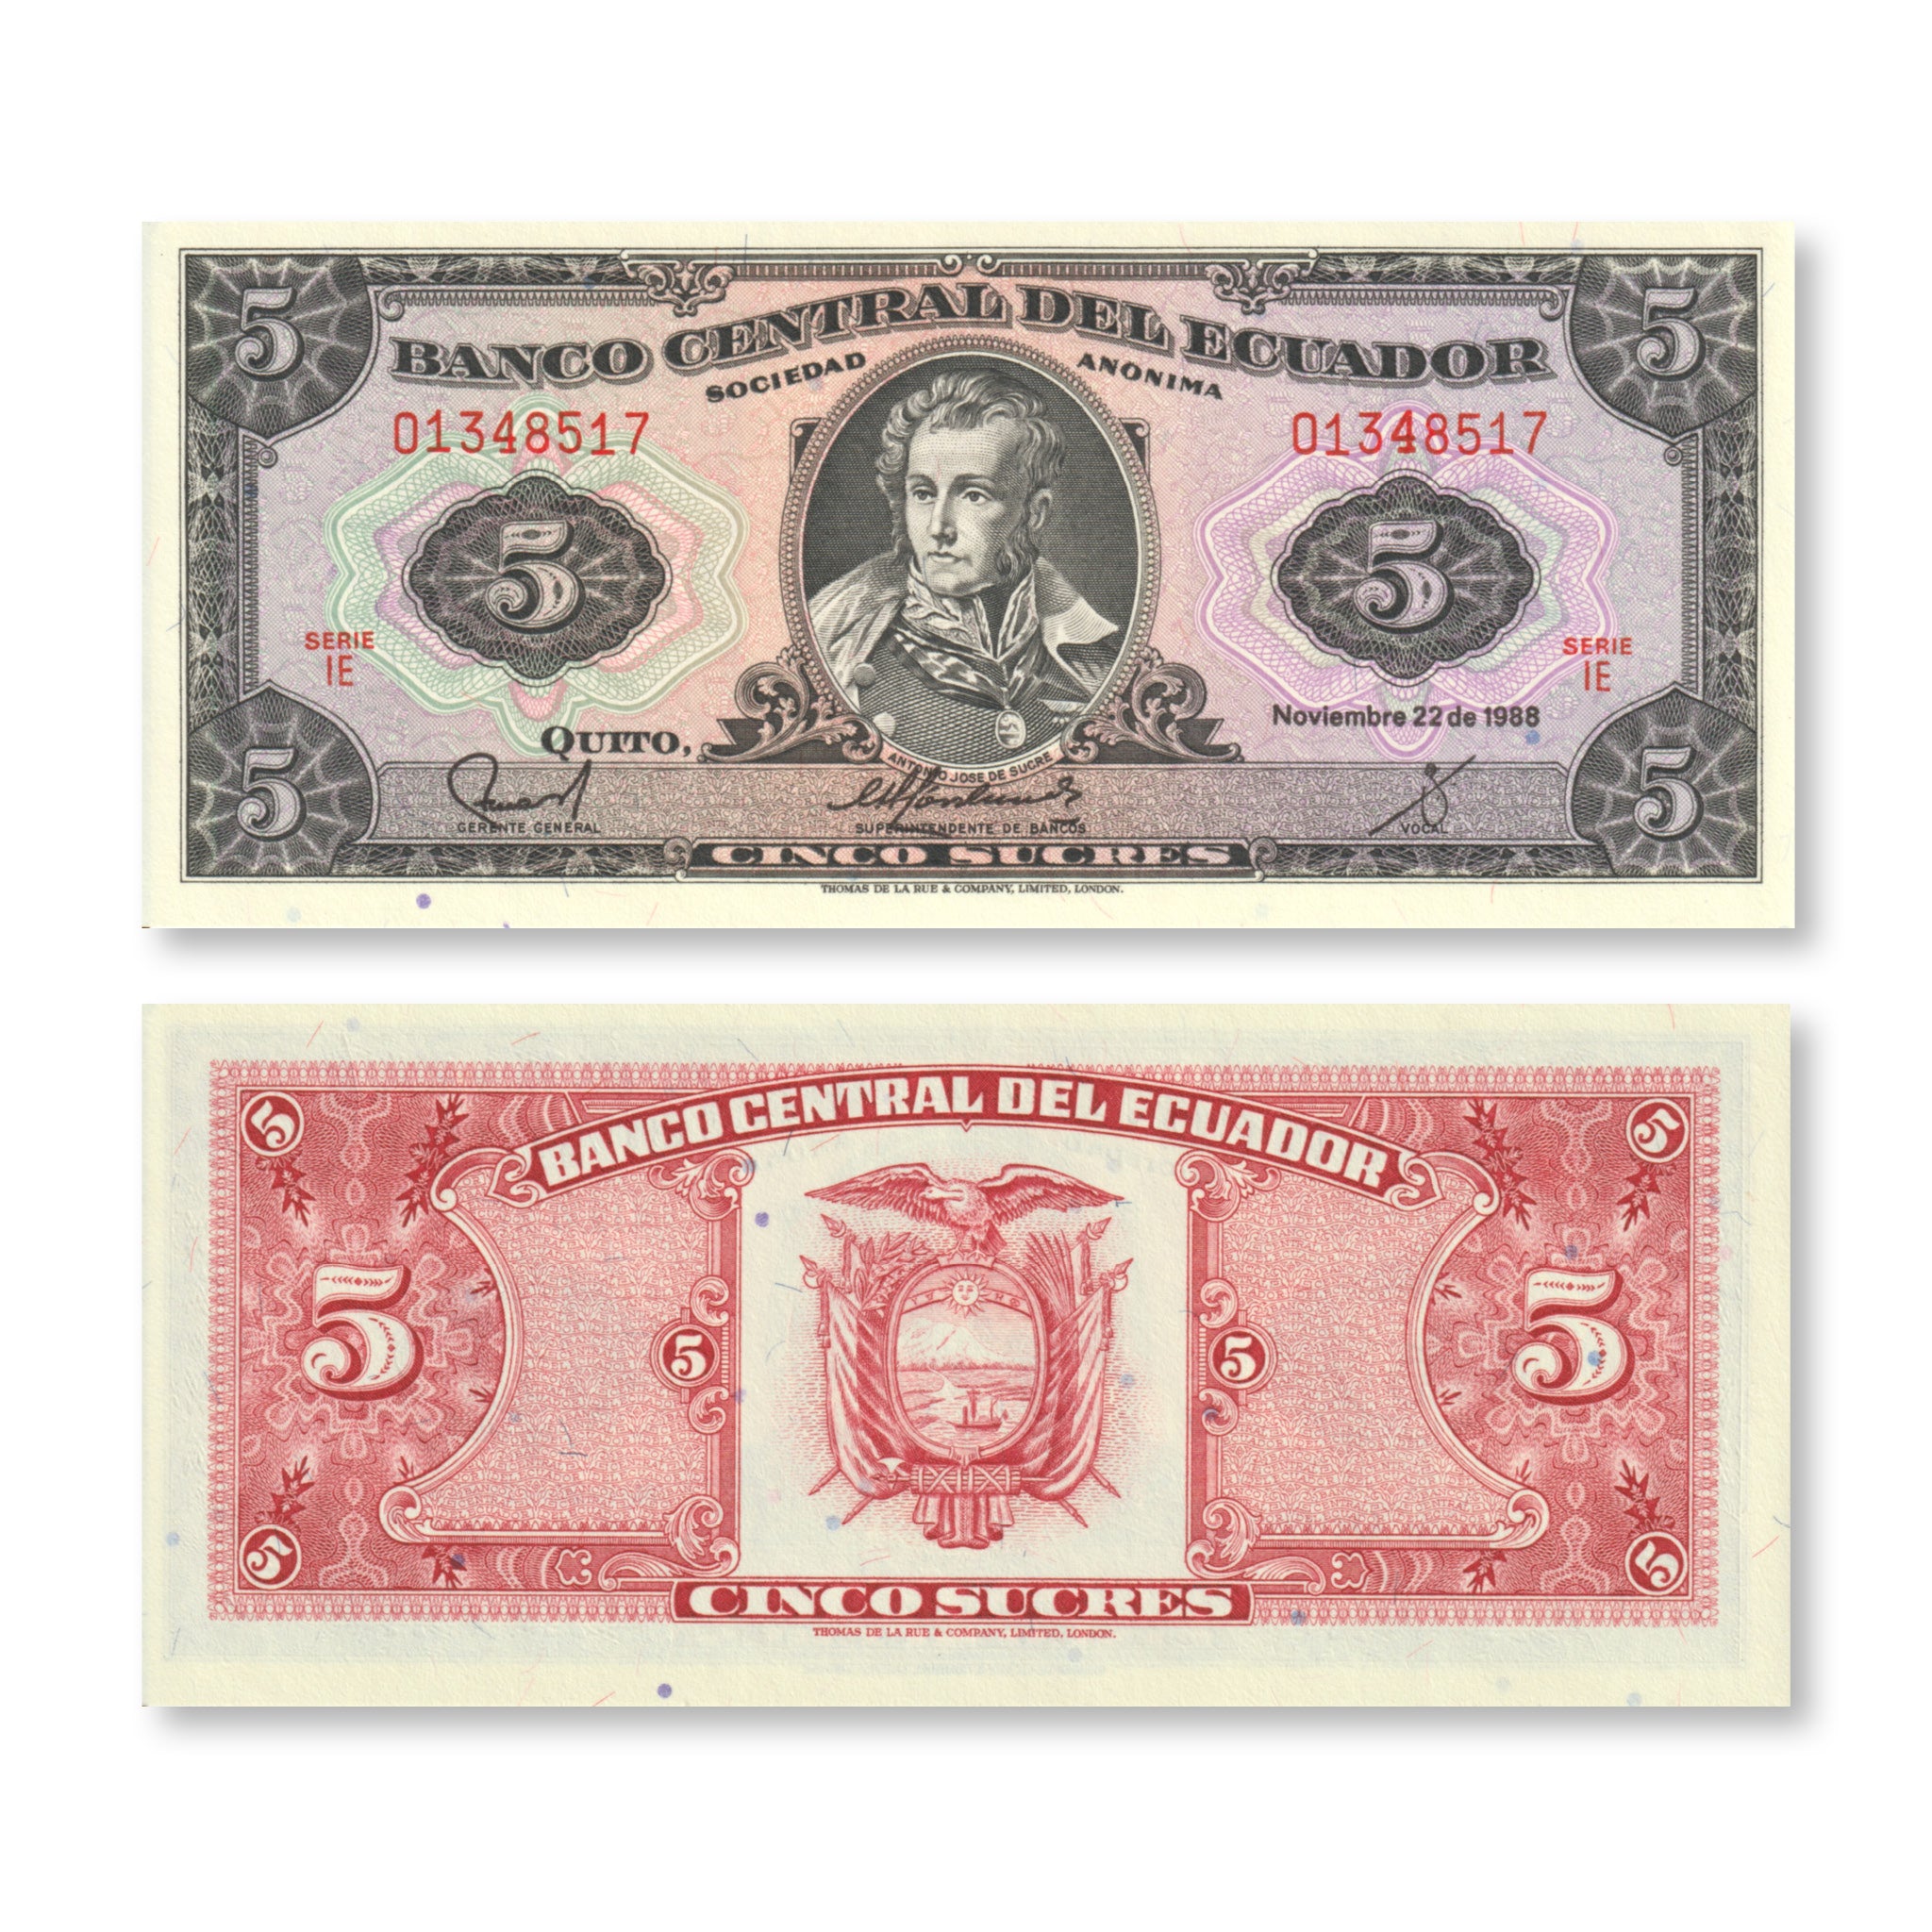 Ecuador 5 Sucres, 1988, , P113d, UNC - Robert's World Money - World Banknotes